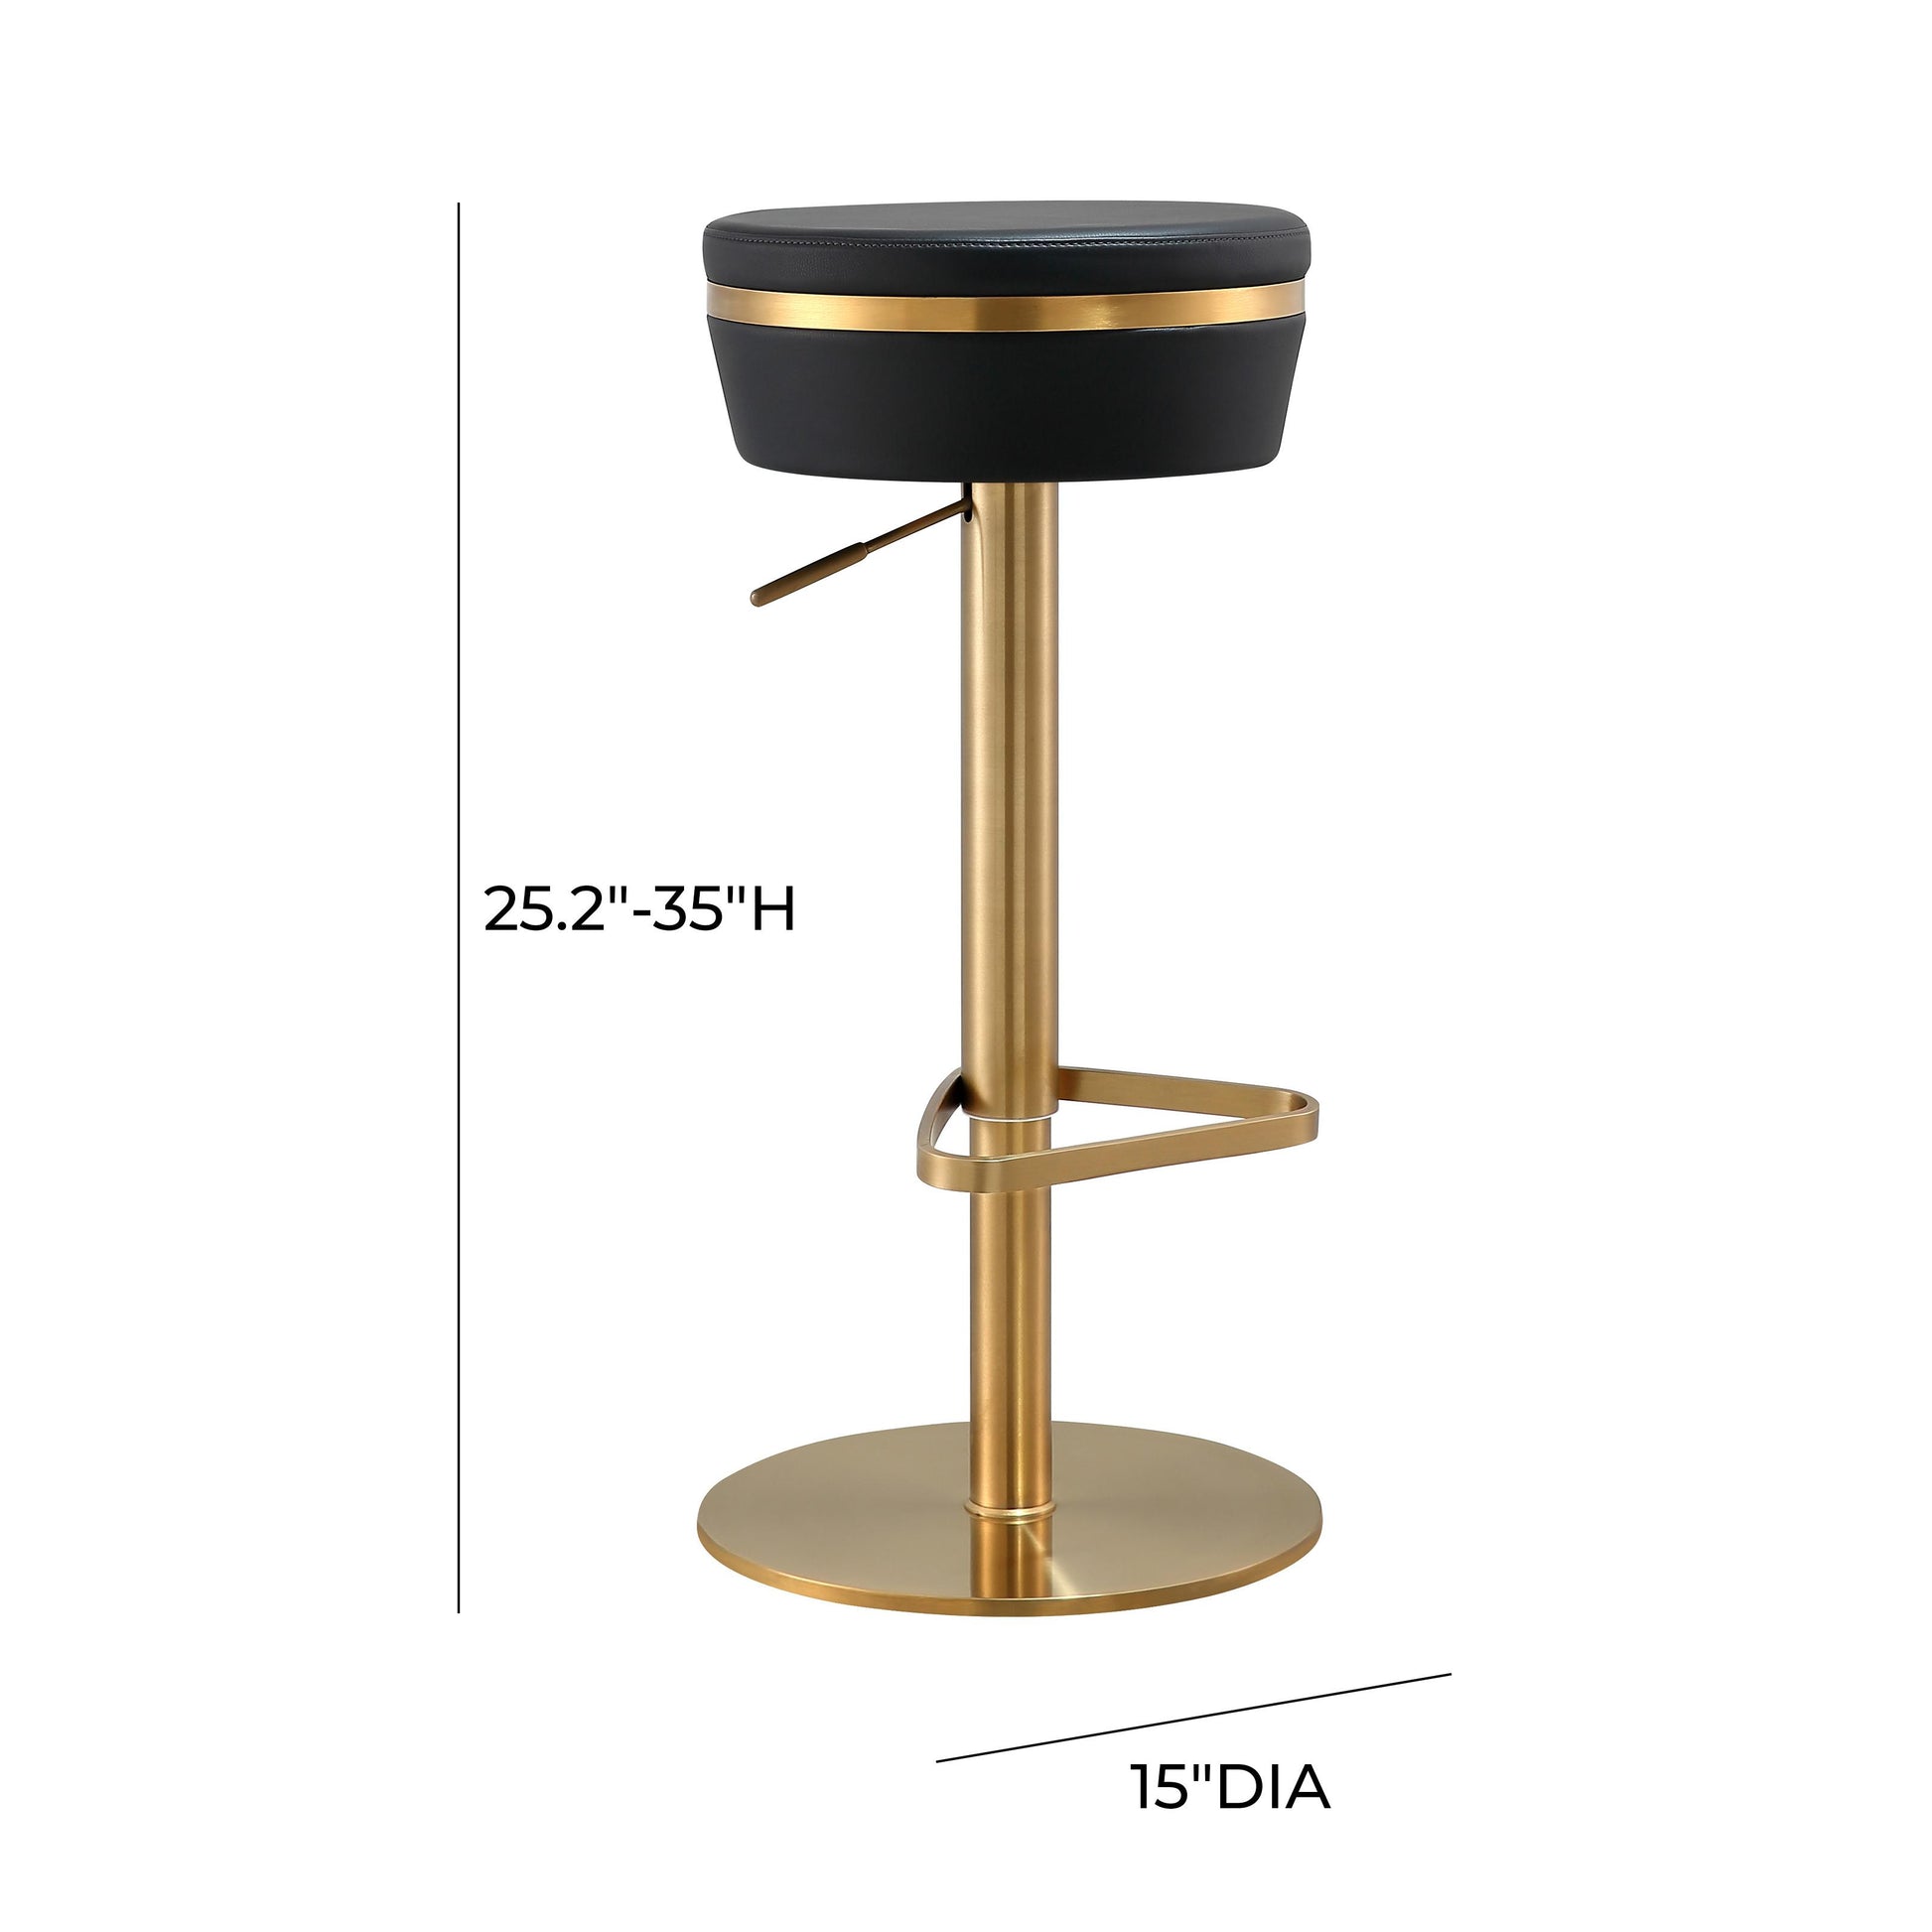 Tov Furniture Astro Black and Gold Adjustable Stool